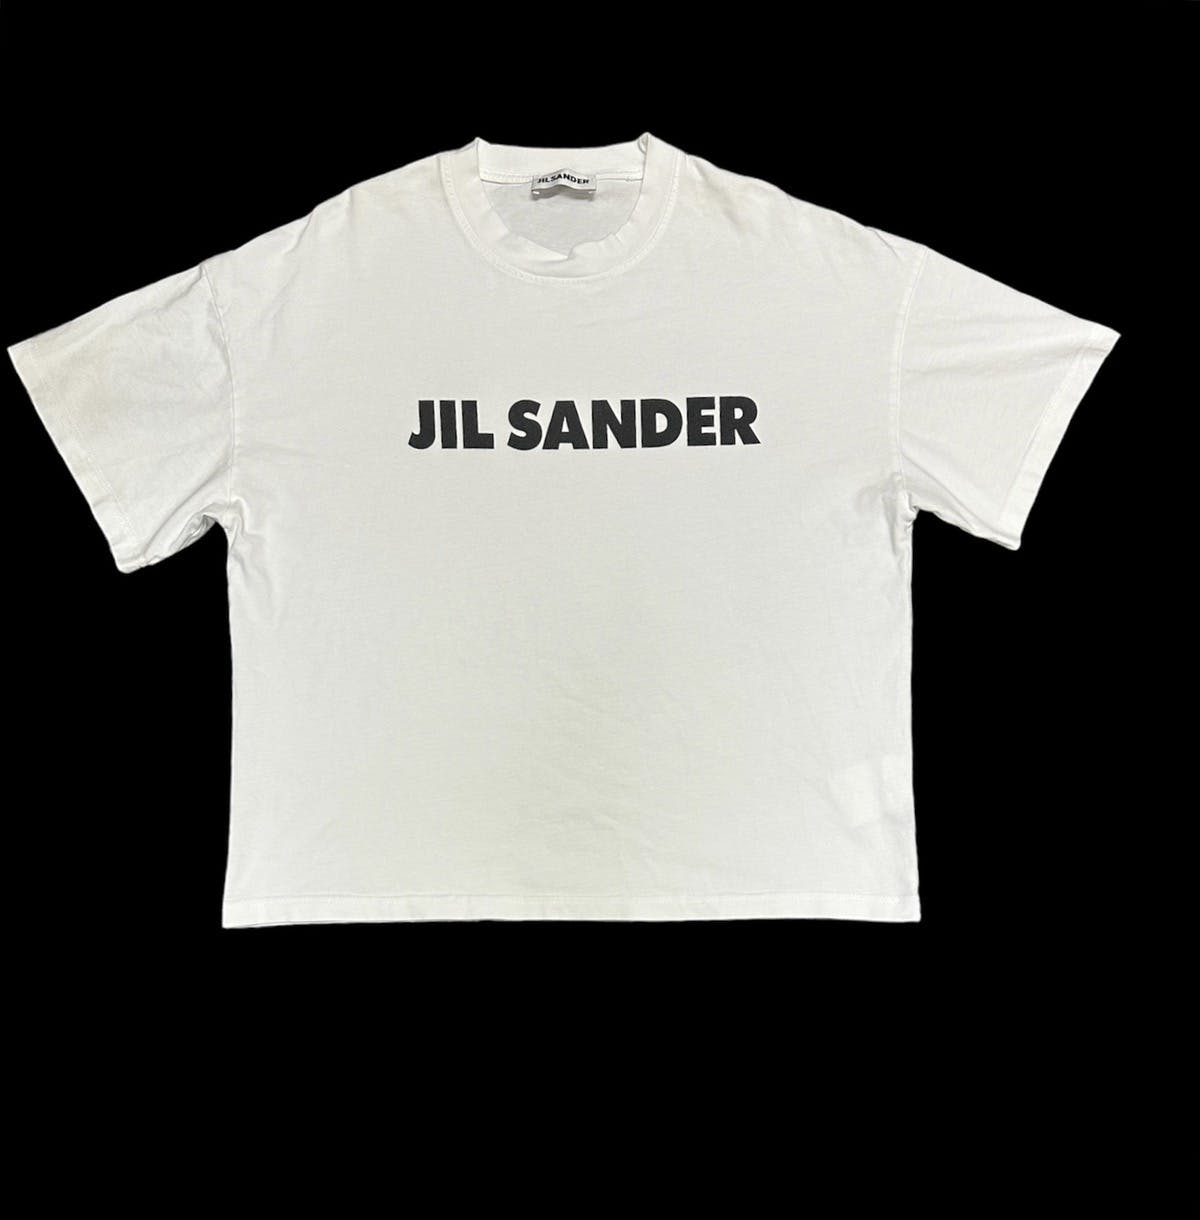 Jill sander spellout tee - 1